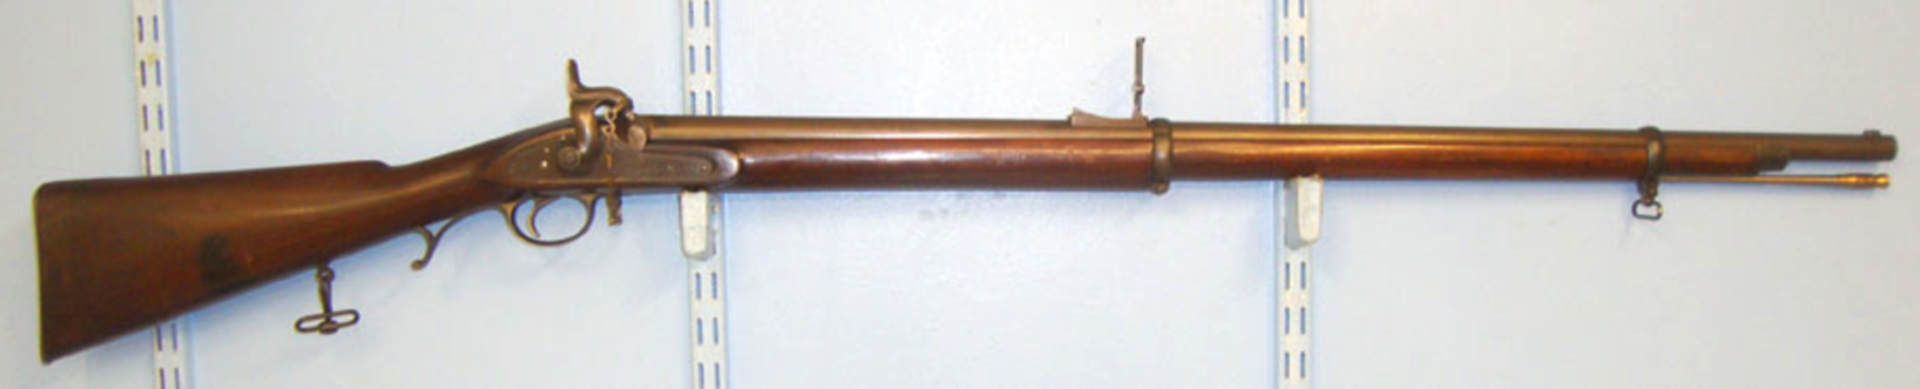 VERY RARE, British Victorian Charles Lancaster's 1850 Patent Regulation Percussion Rifle